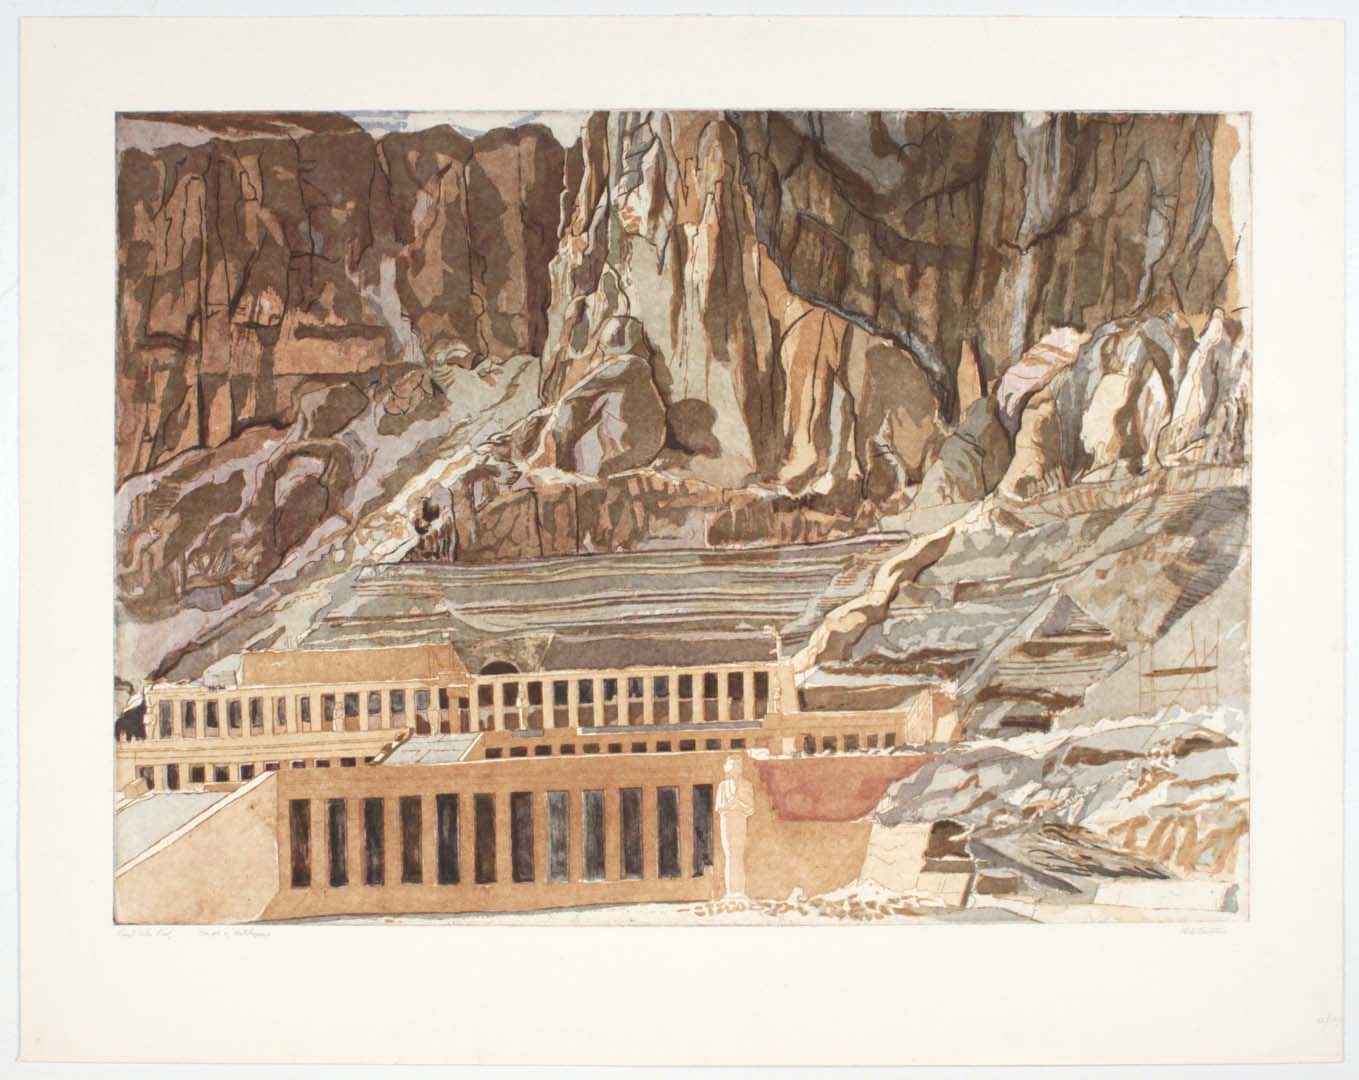 1979 Temple of Hatshepsut Aquatint Etching on Paper 30.25 x 29.125